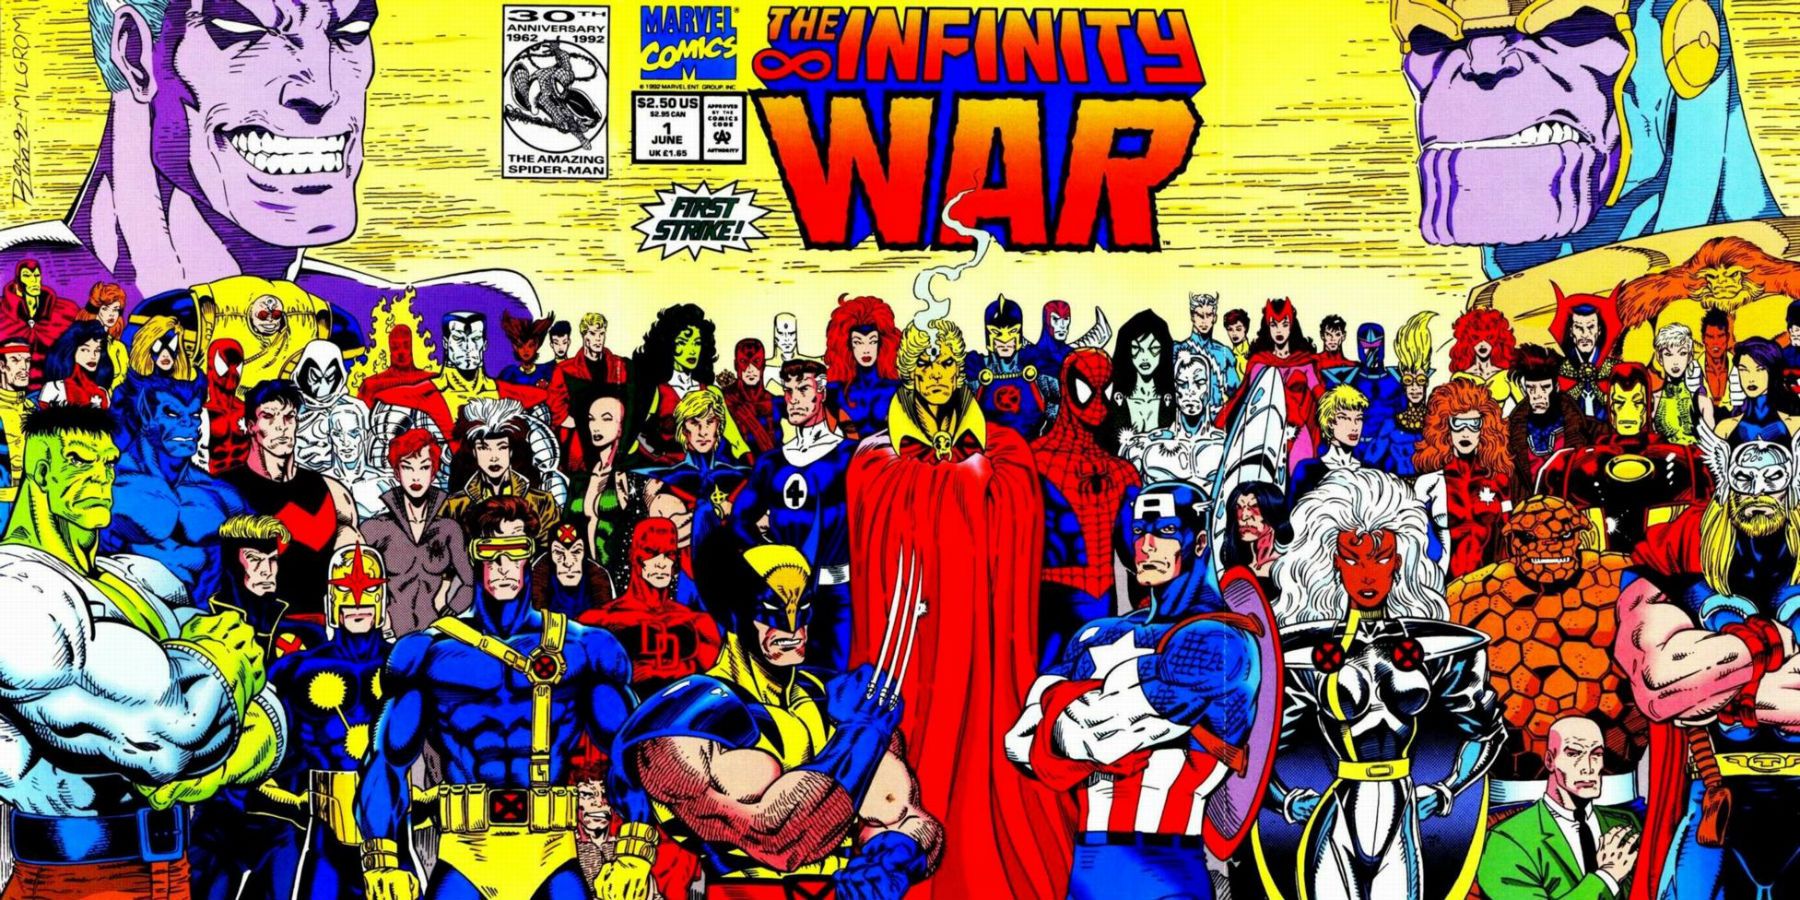 Infinity War comics lineup from Marvel comics